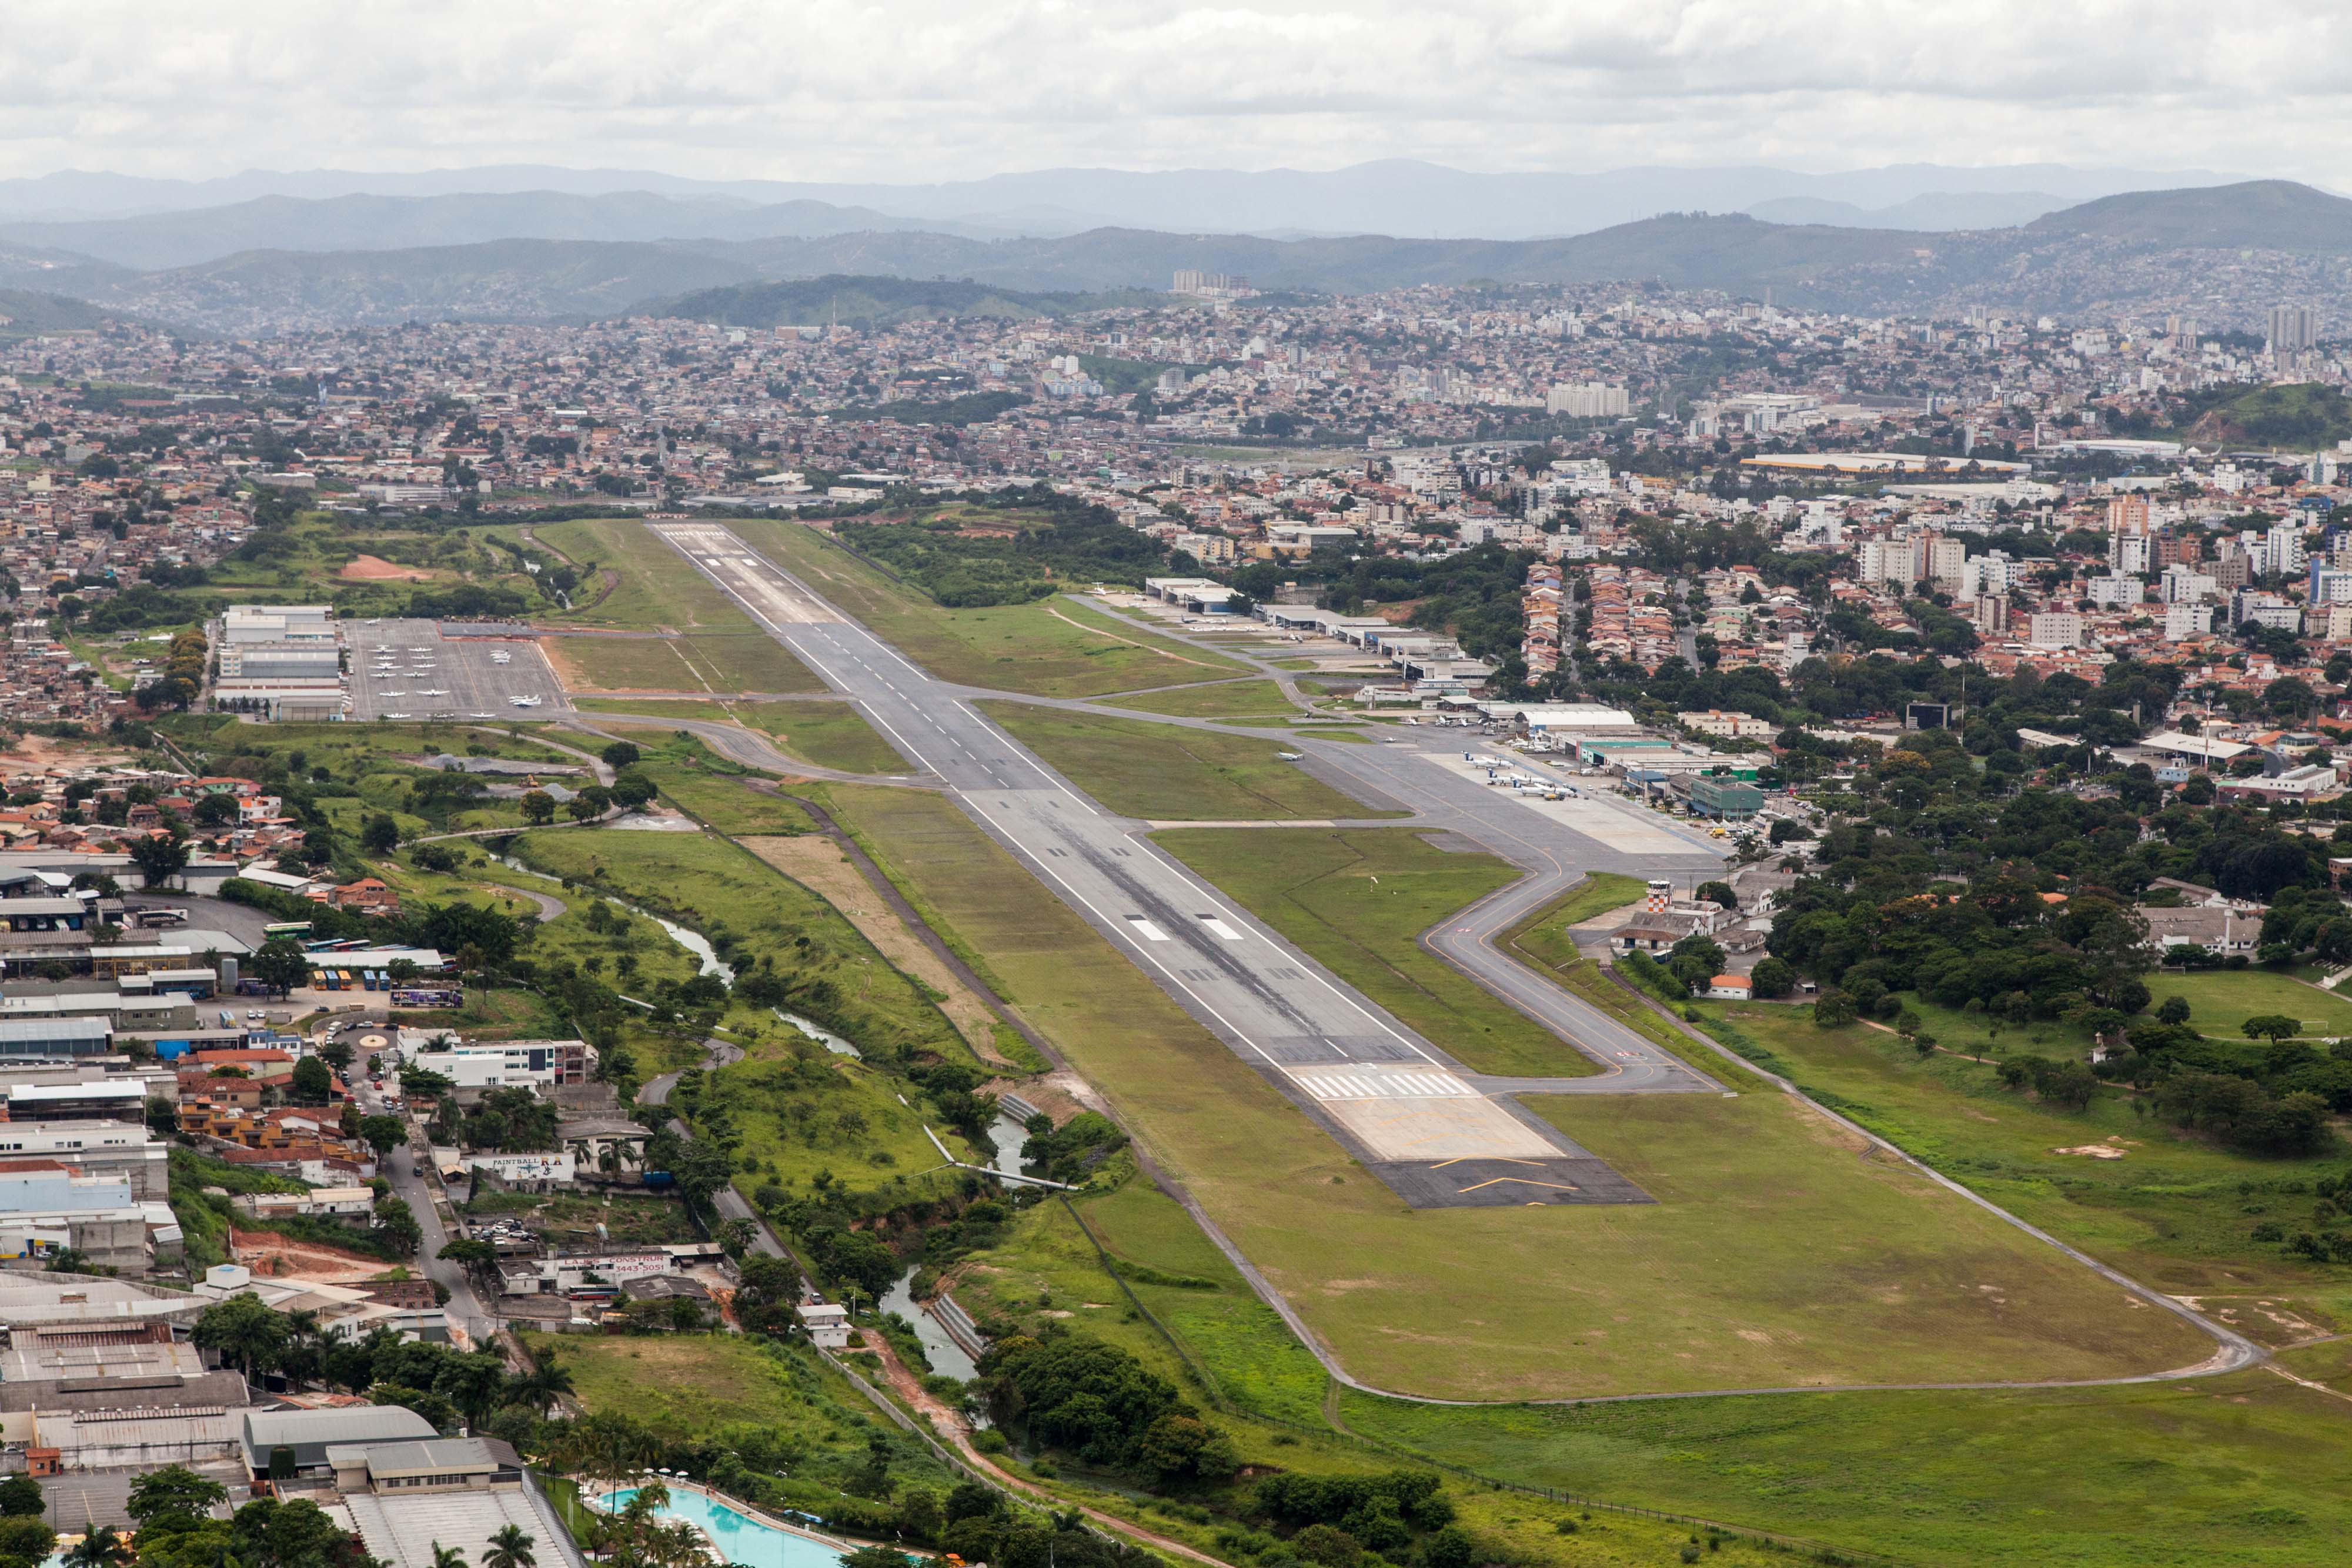 Itatpipoca in Ceará, Brazil Plan for New Airport Development